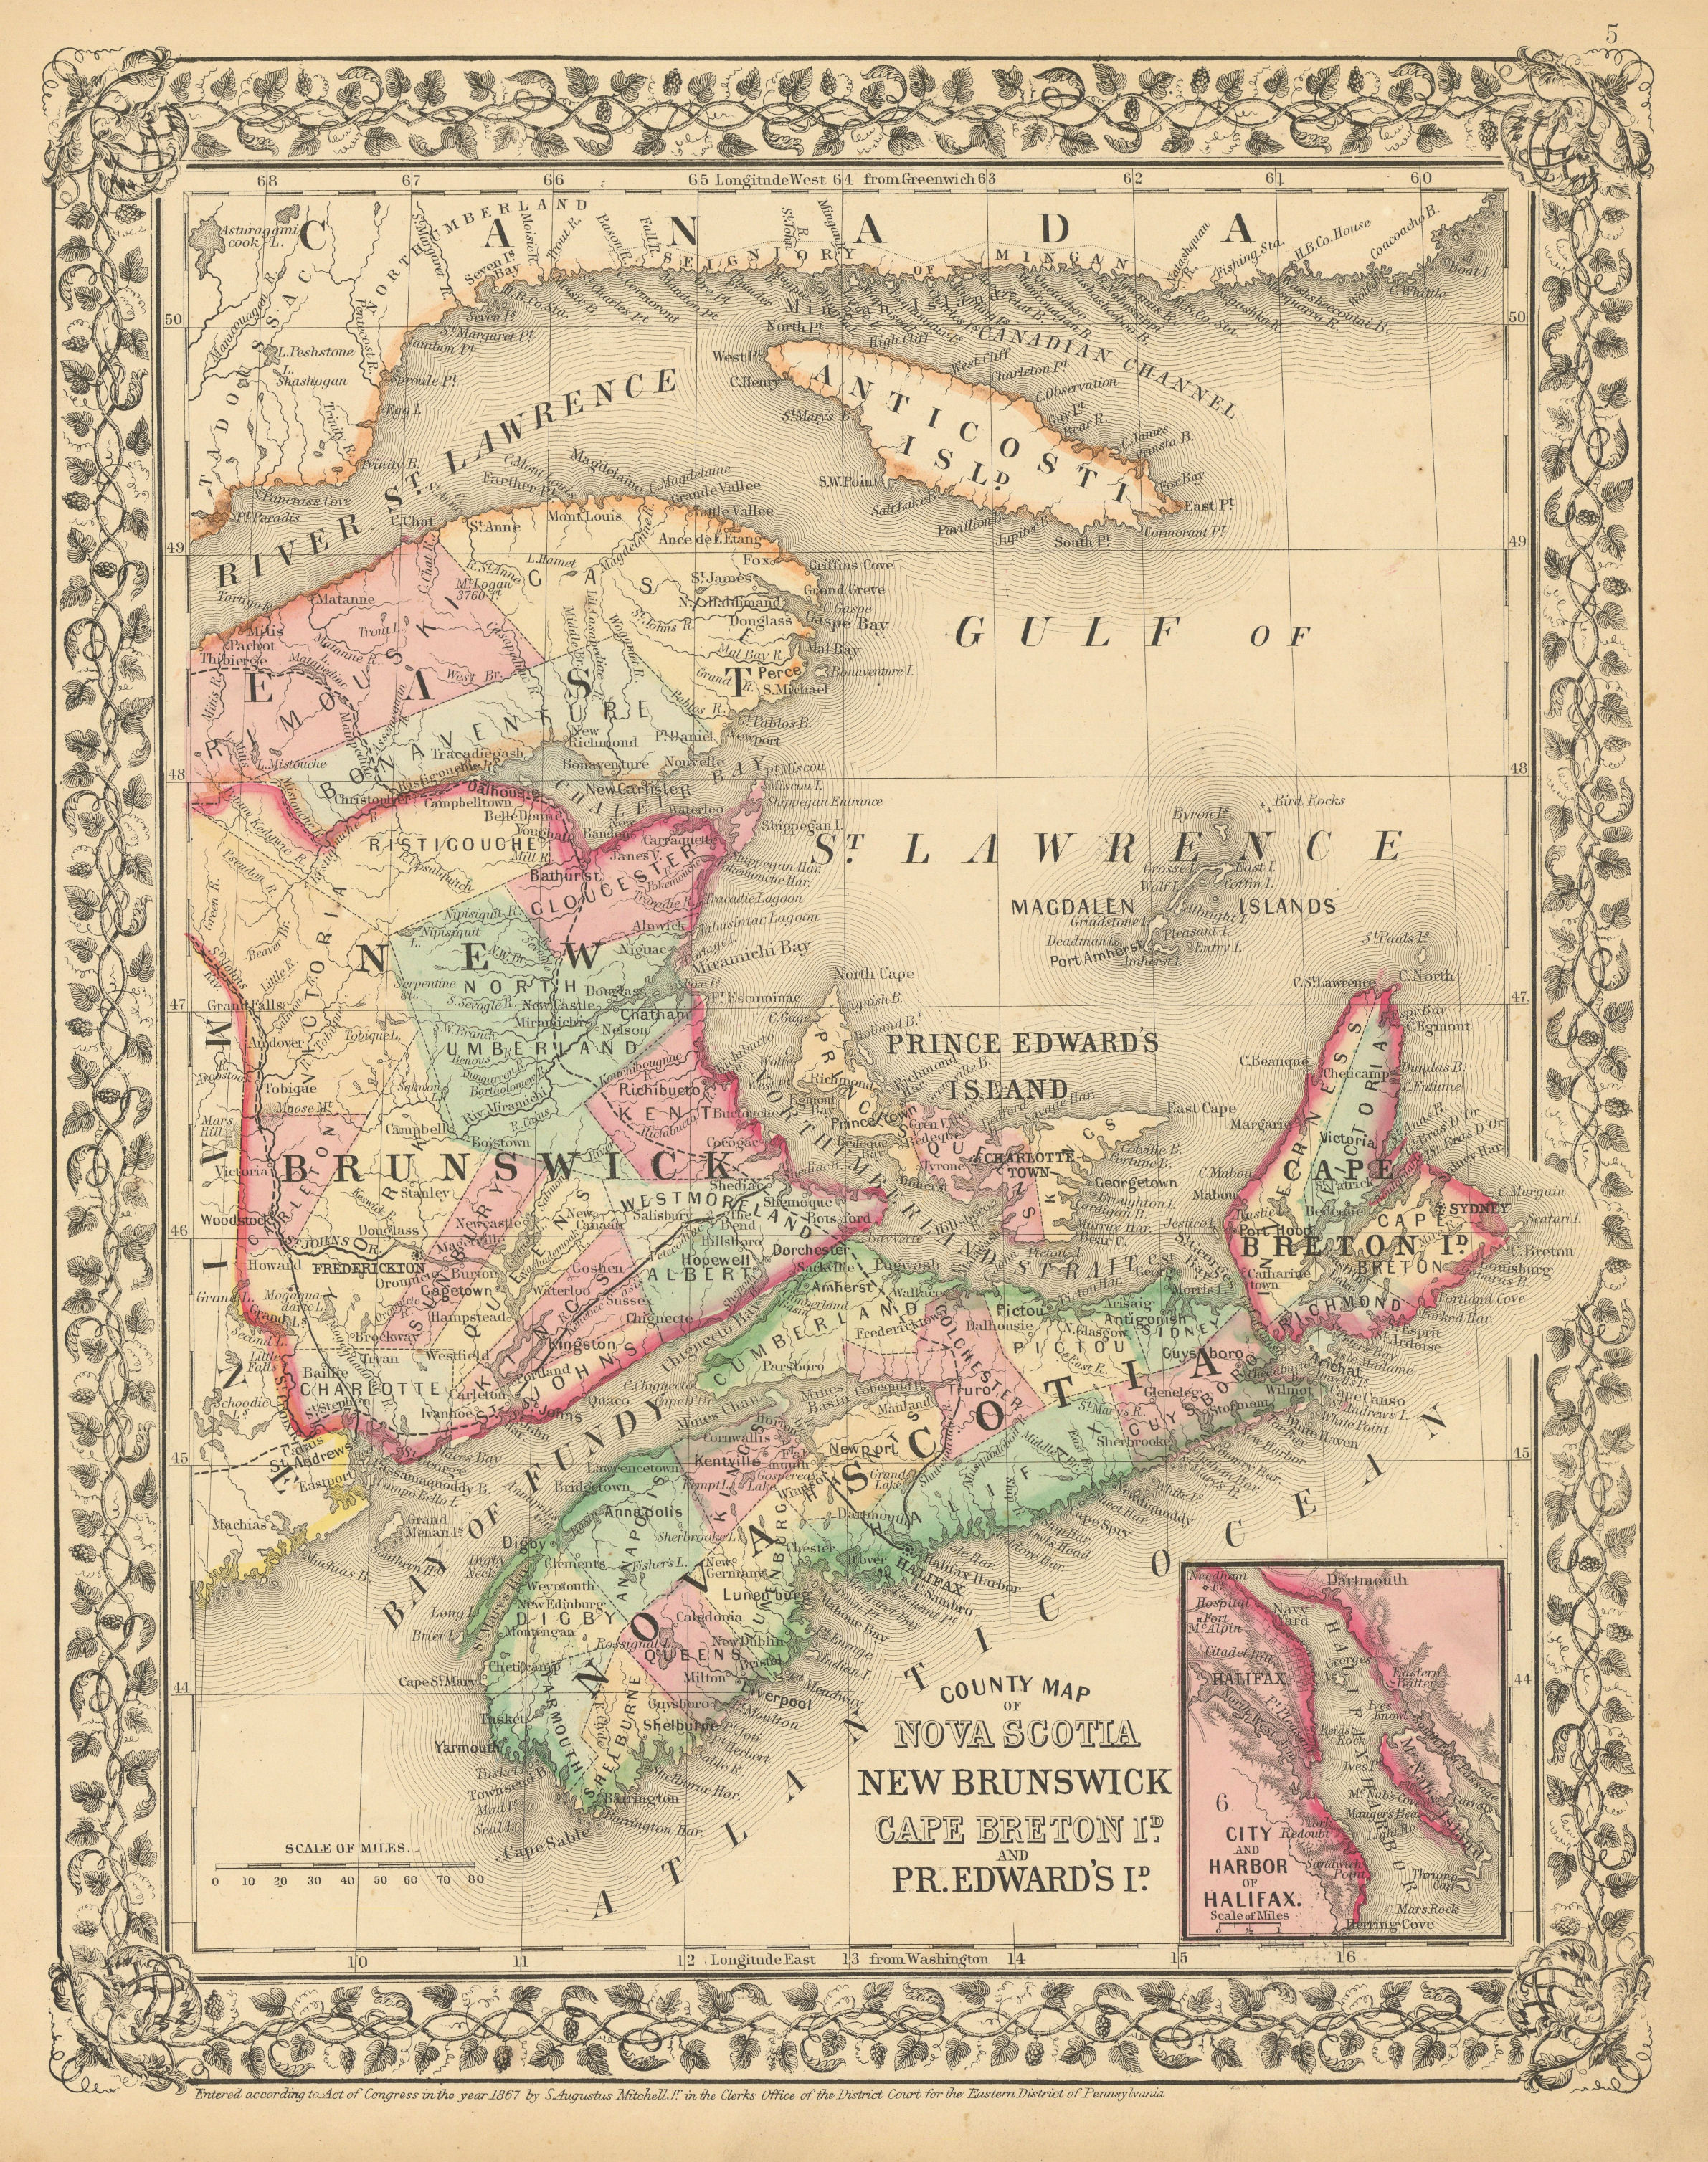 Associate Product Nova Scotia, New Brunswick, Cape Breton Island & PEI. Canada. MITCHELL 1869 map